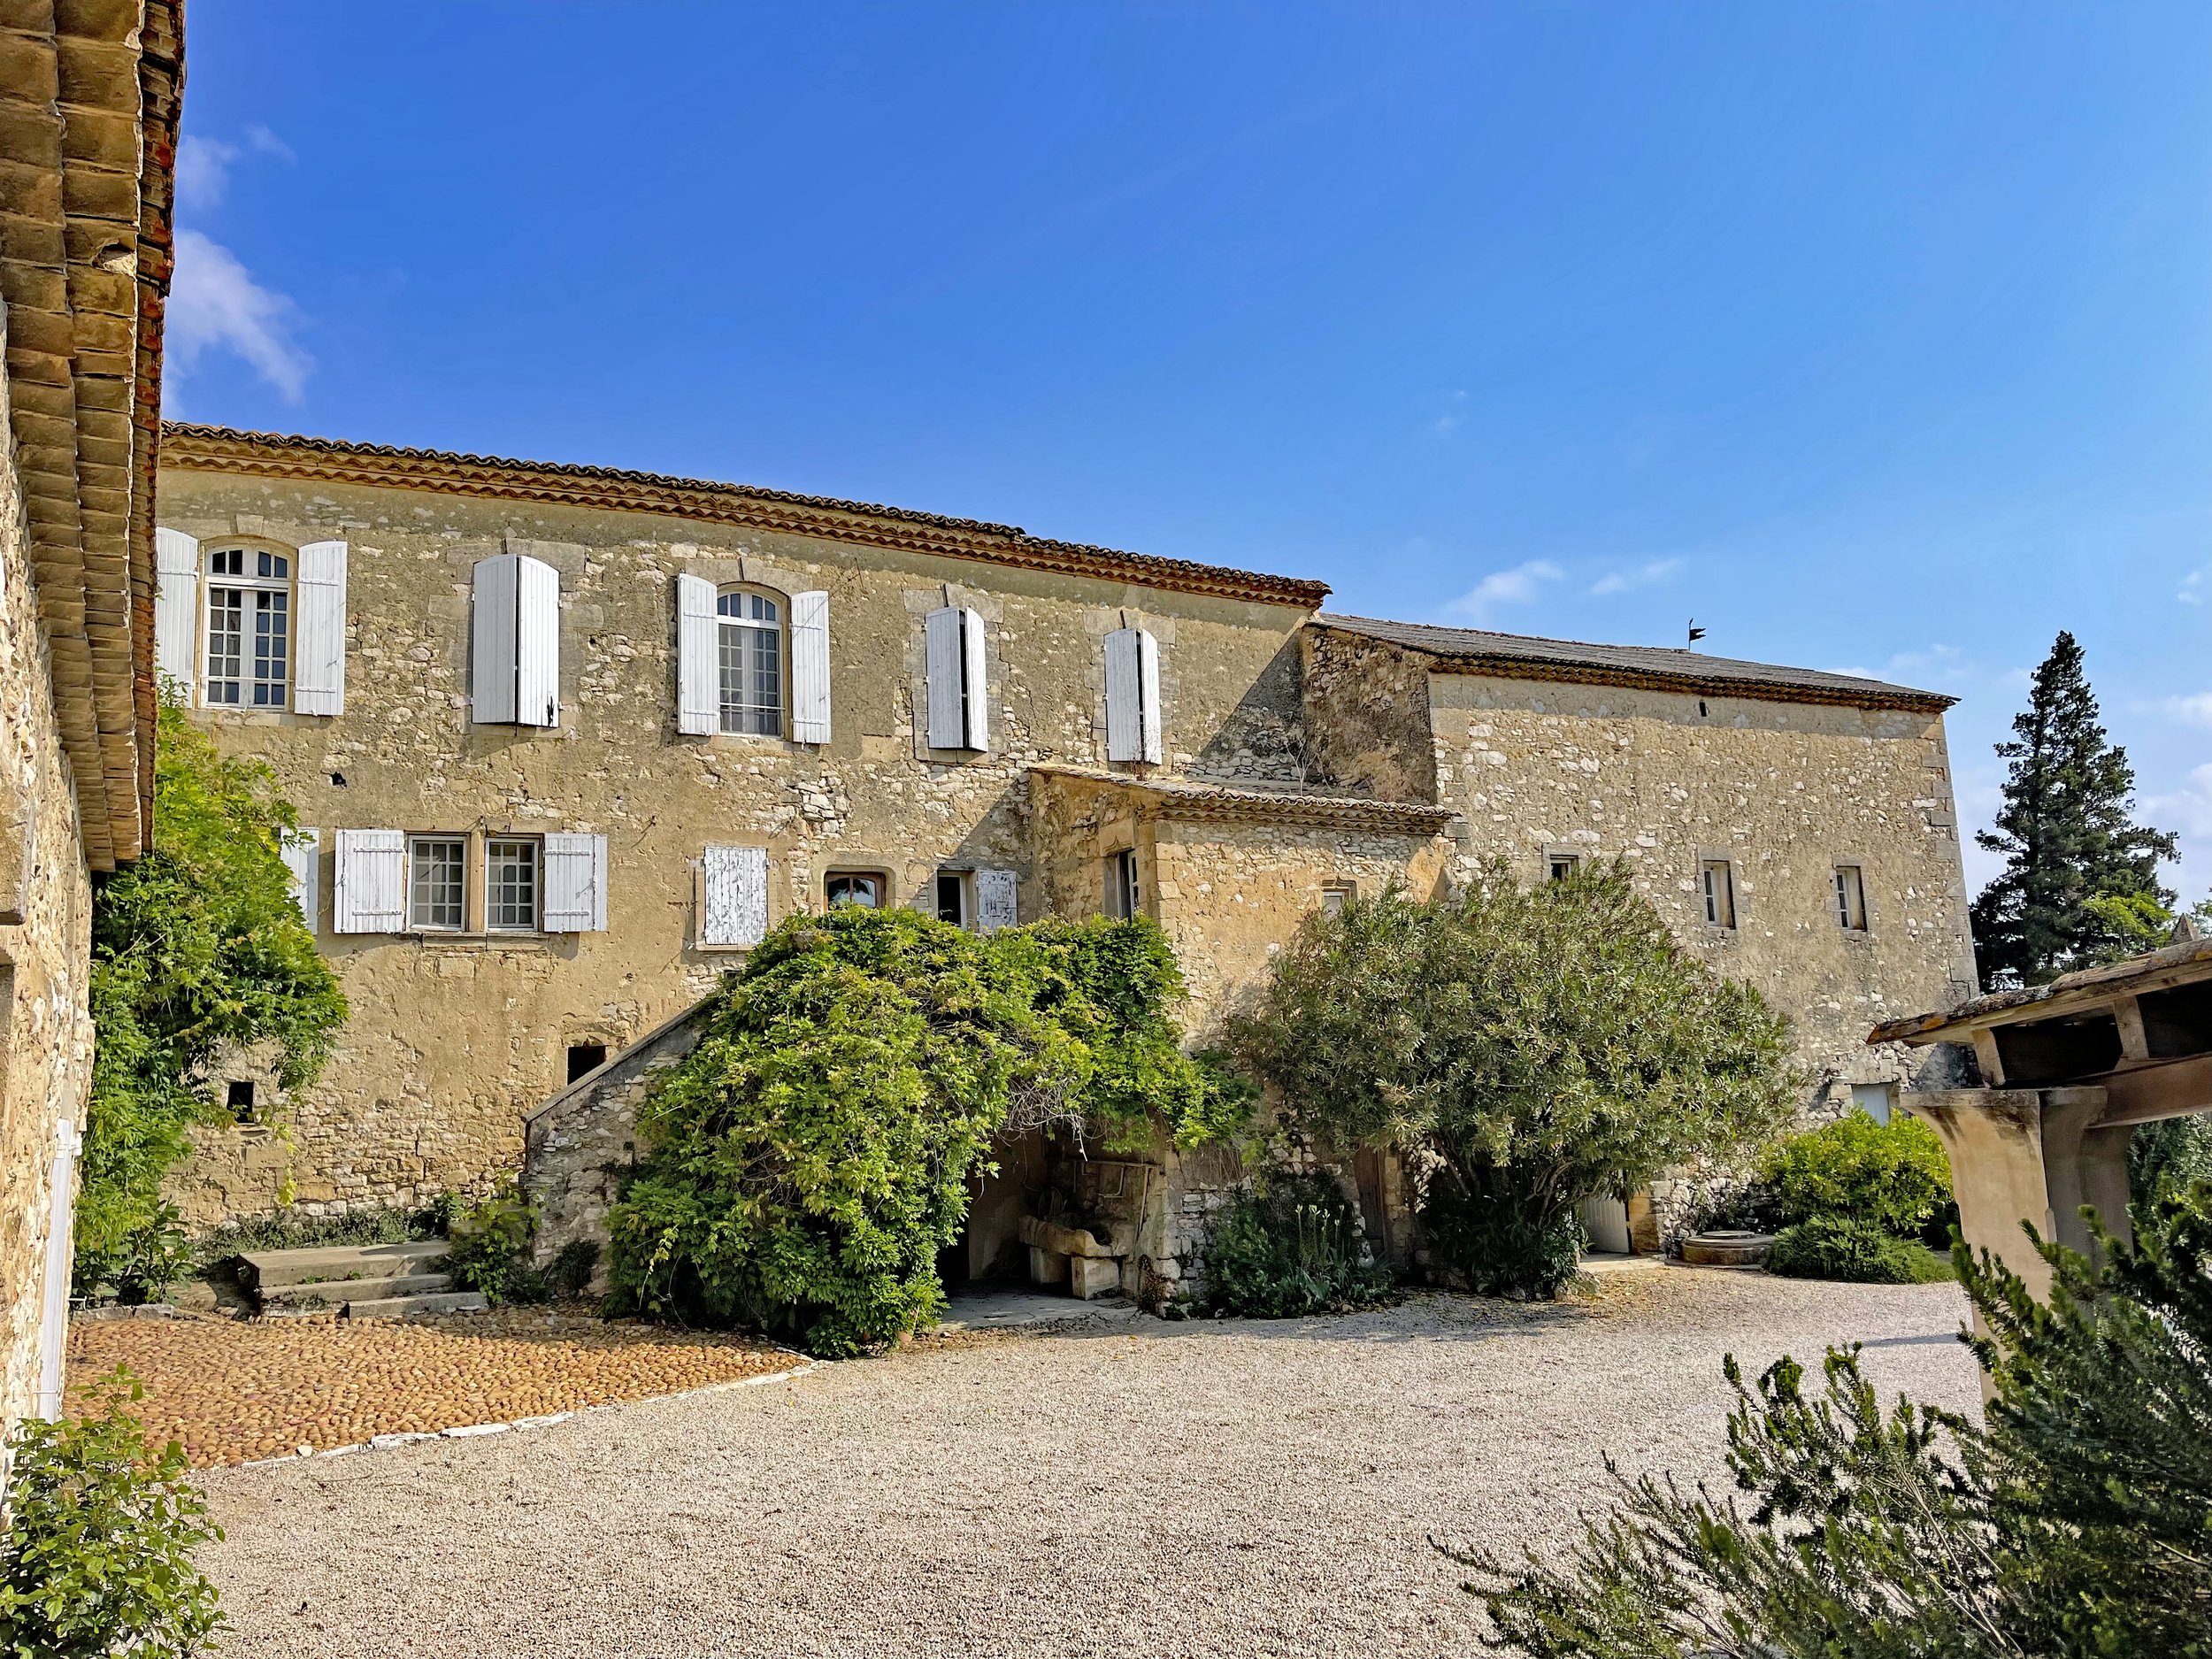 Francis York Wine Estate with Organic Vineyards in the Rhône Valley, France 9.jpg